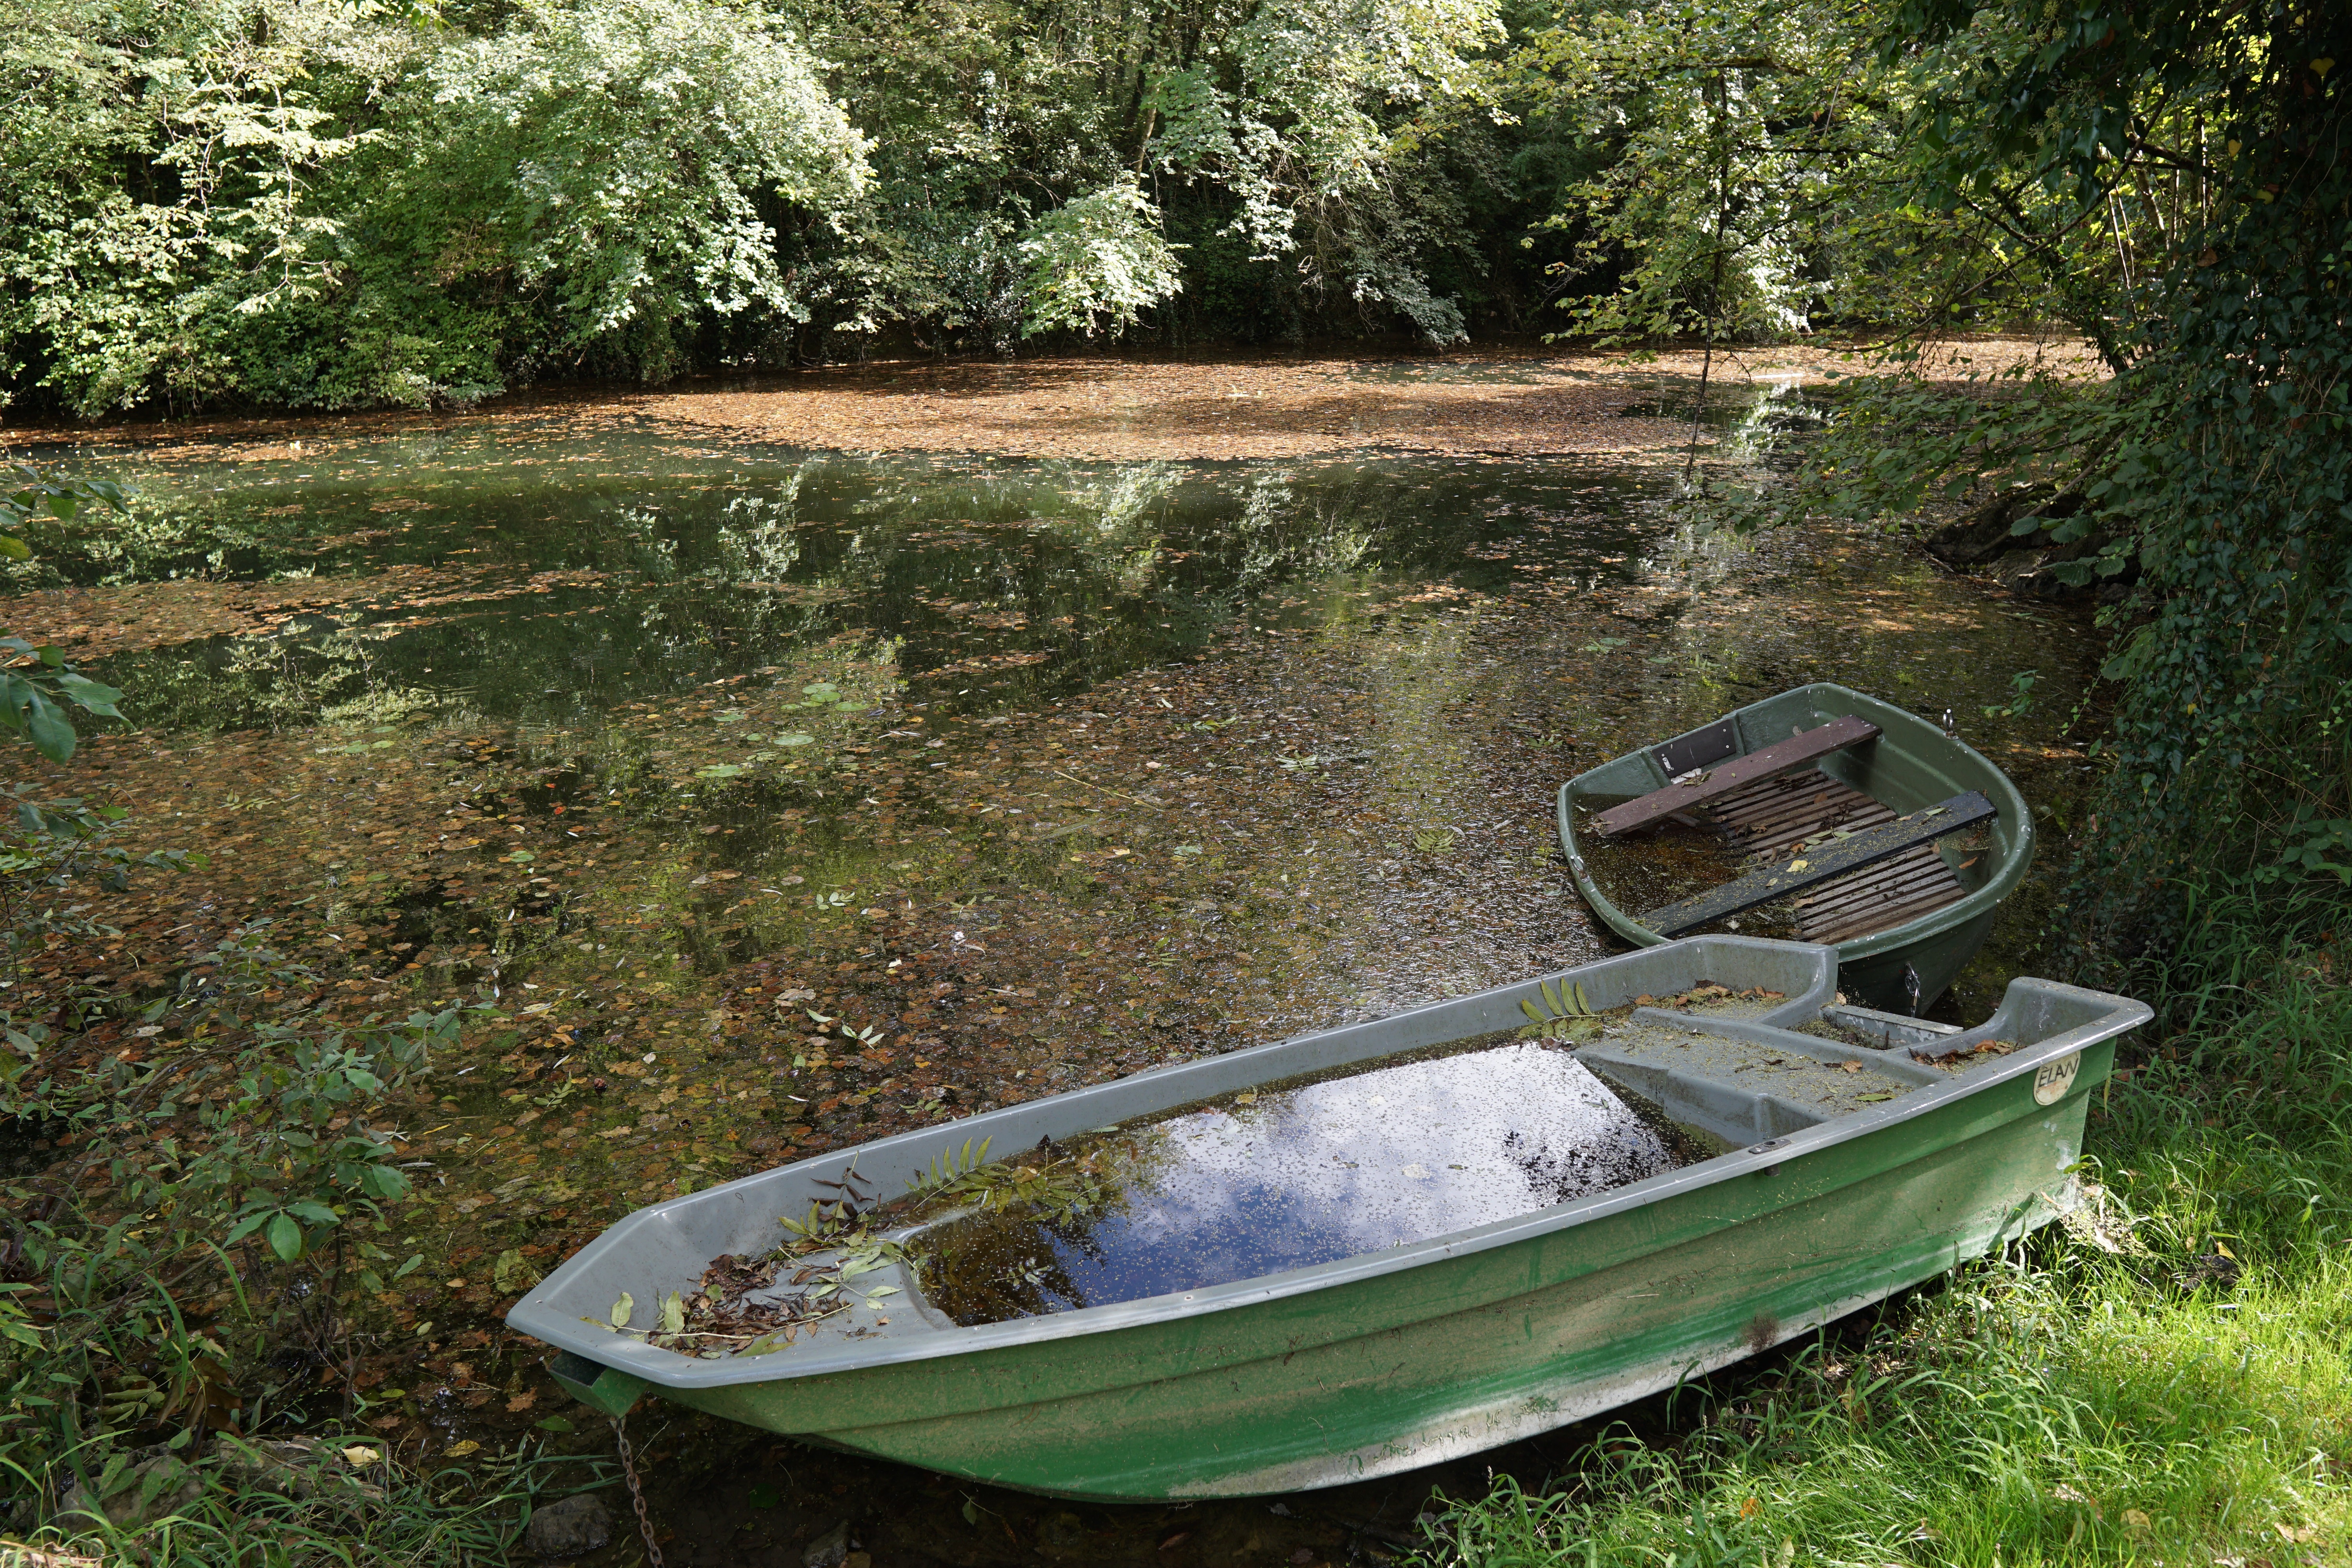 Swamp boats